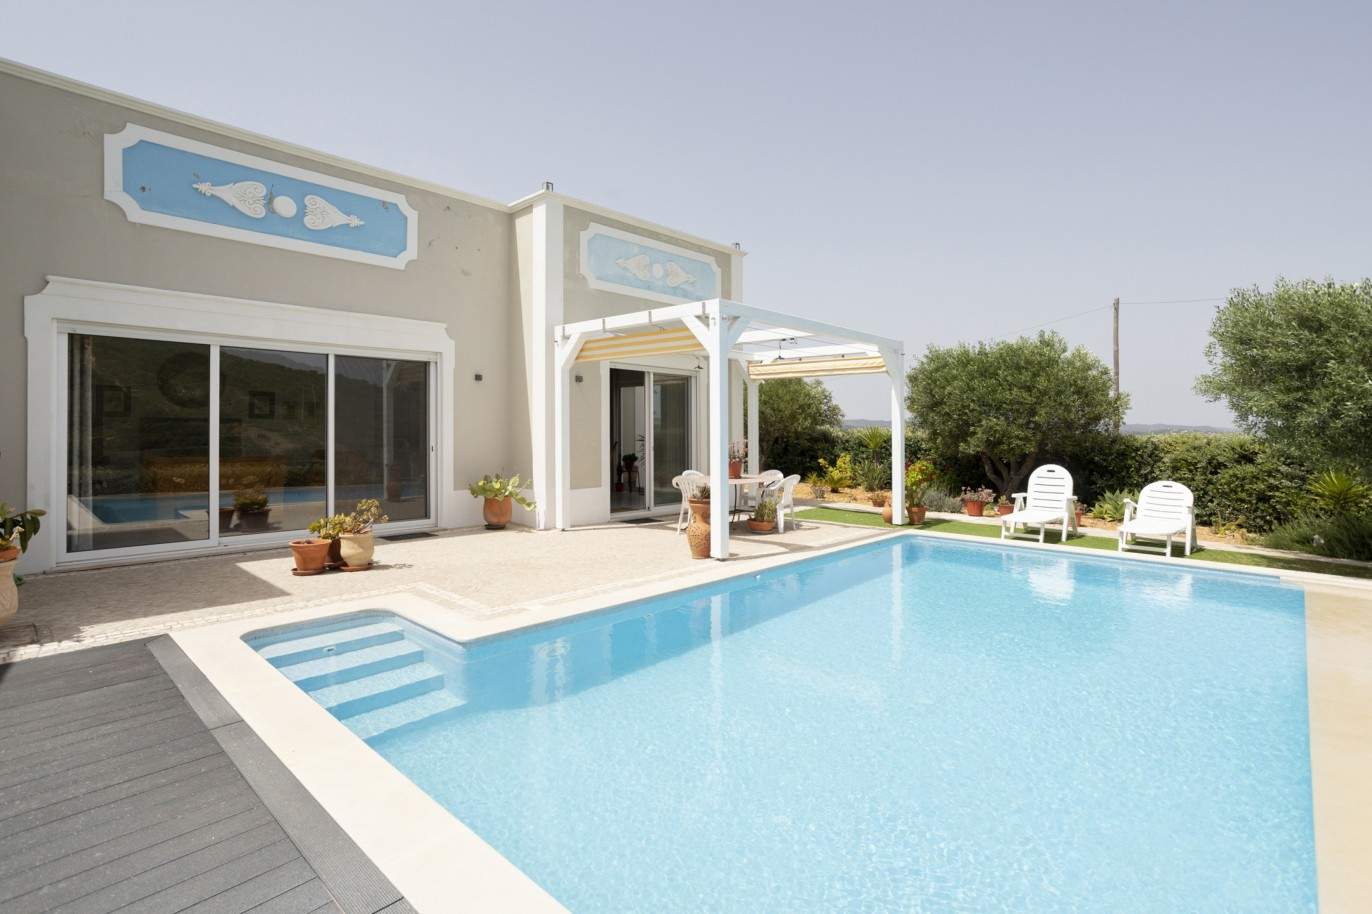 3 Bedroom Villa with swimming pool, for sale in Estoi, Algarve_201382